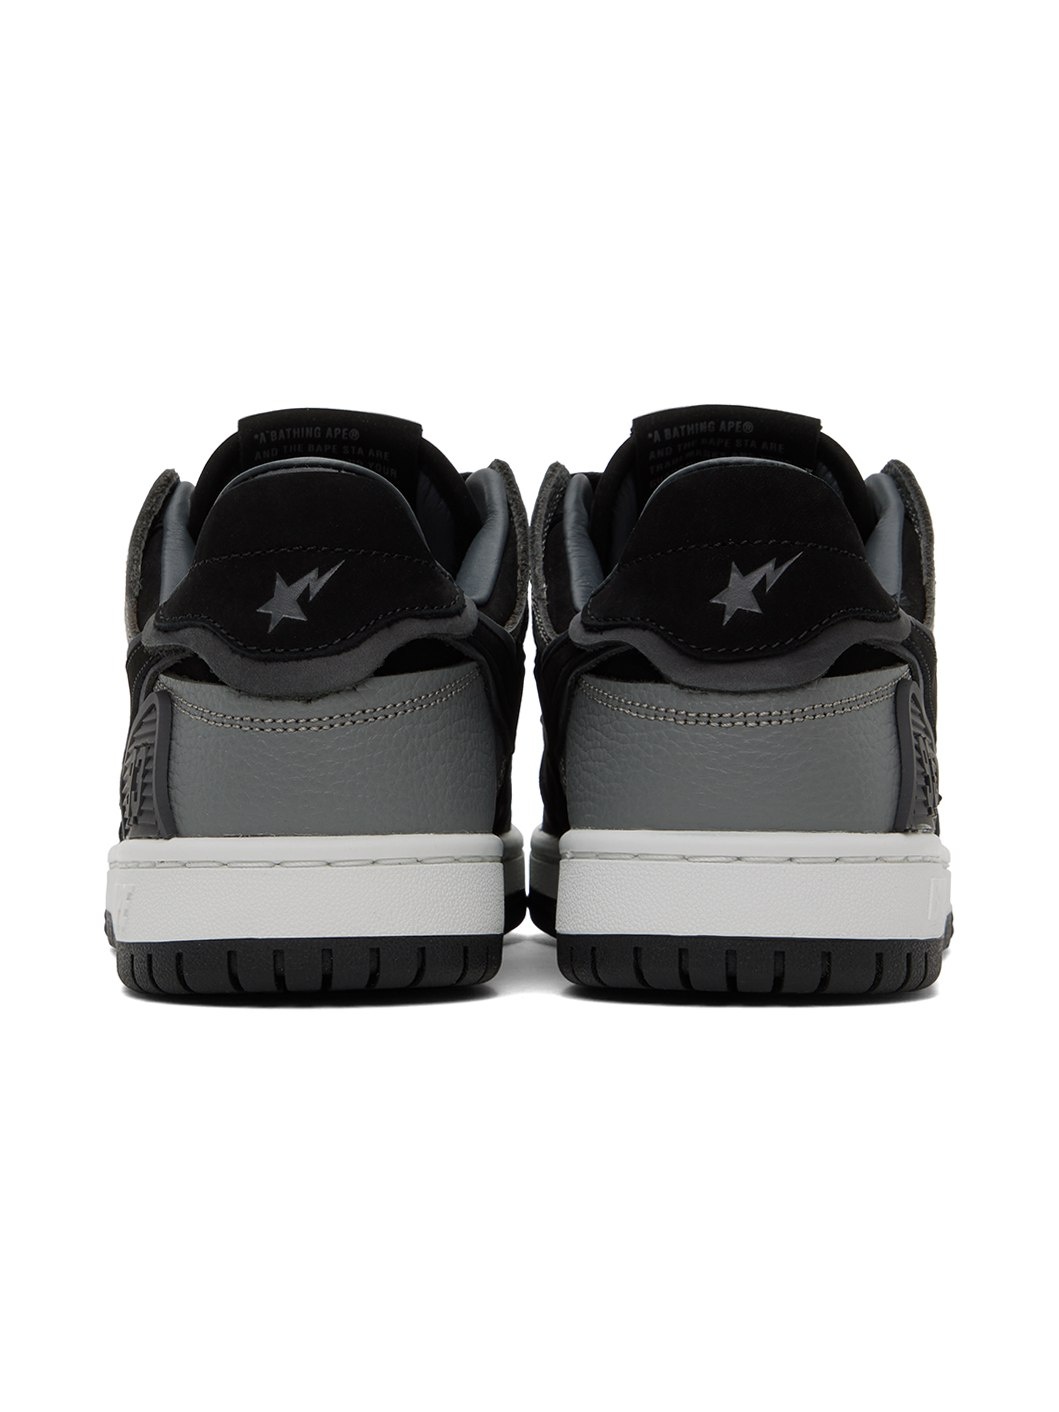 Black & Gray Sk8 Sta #6 M2 Sneakers - 2